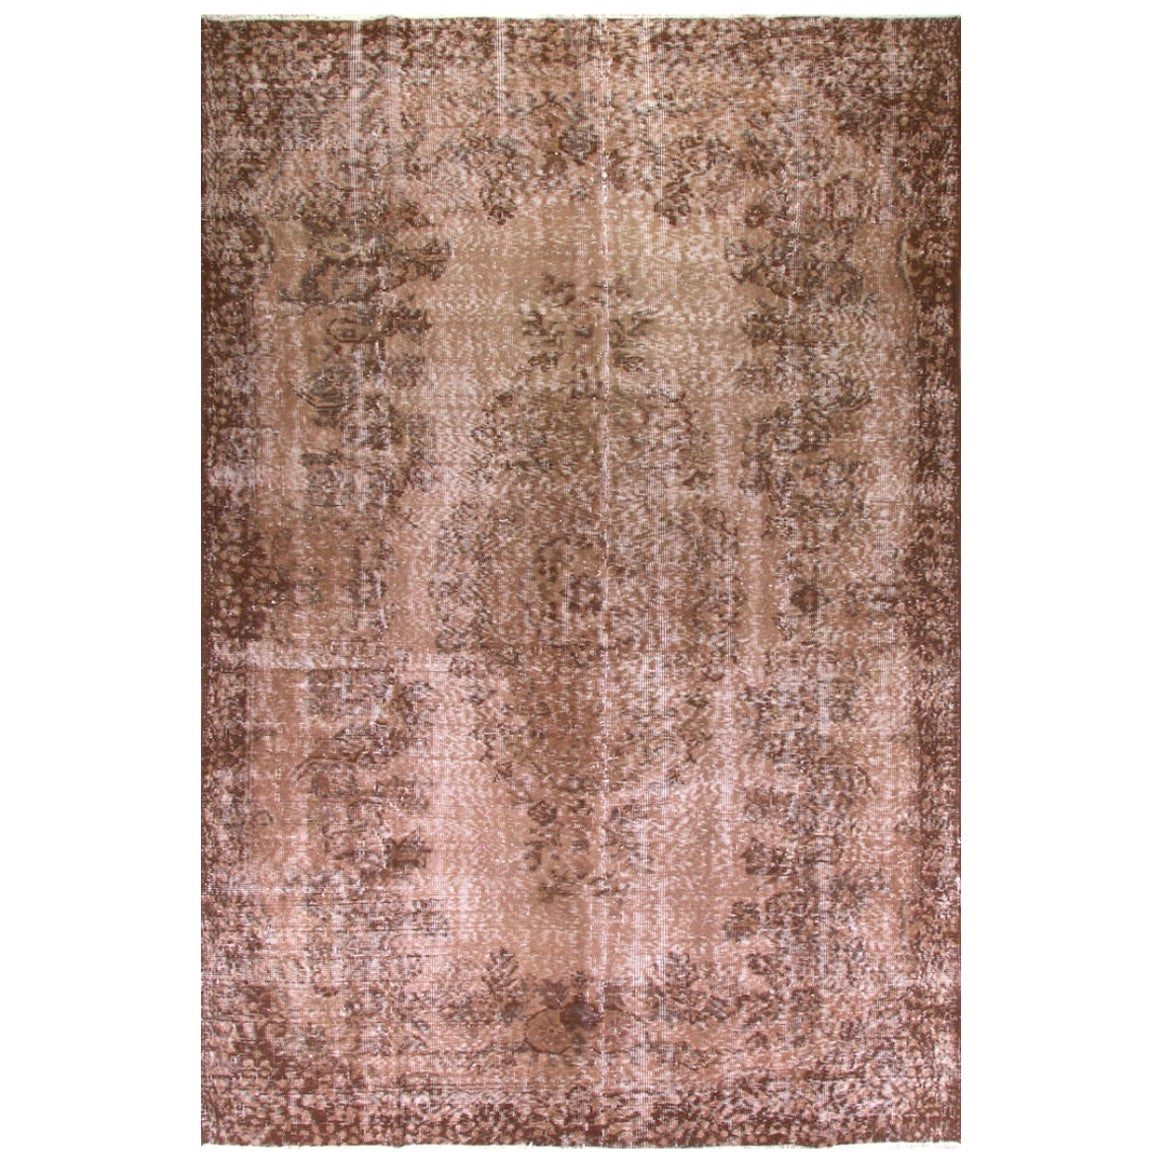 5.5x8.2 ft Brown Handmade Turkish Area Rug, Midcentury Baroque Design Carpet